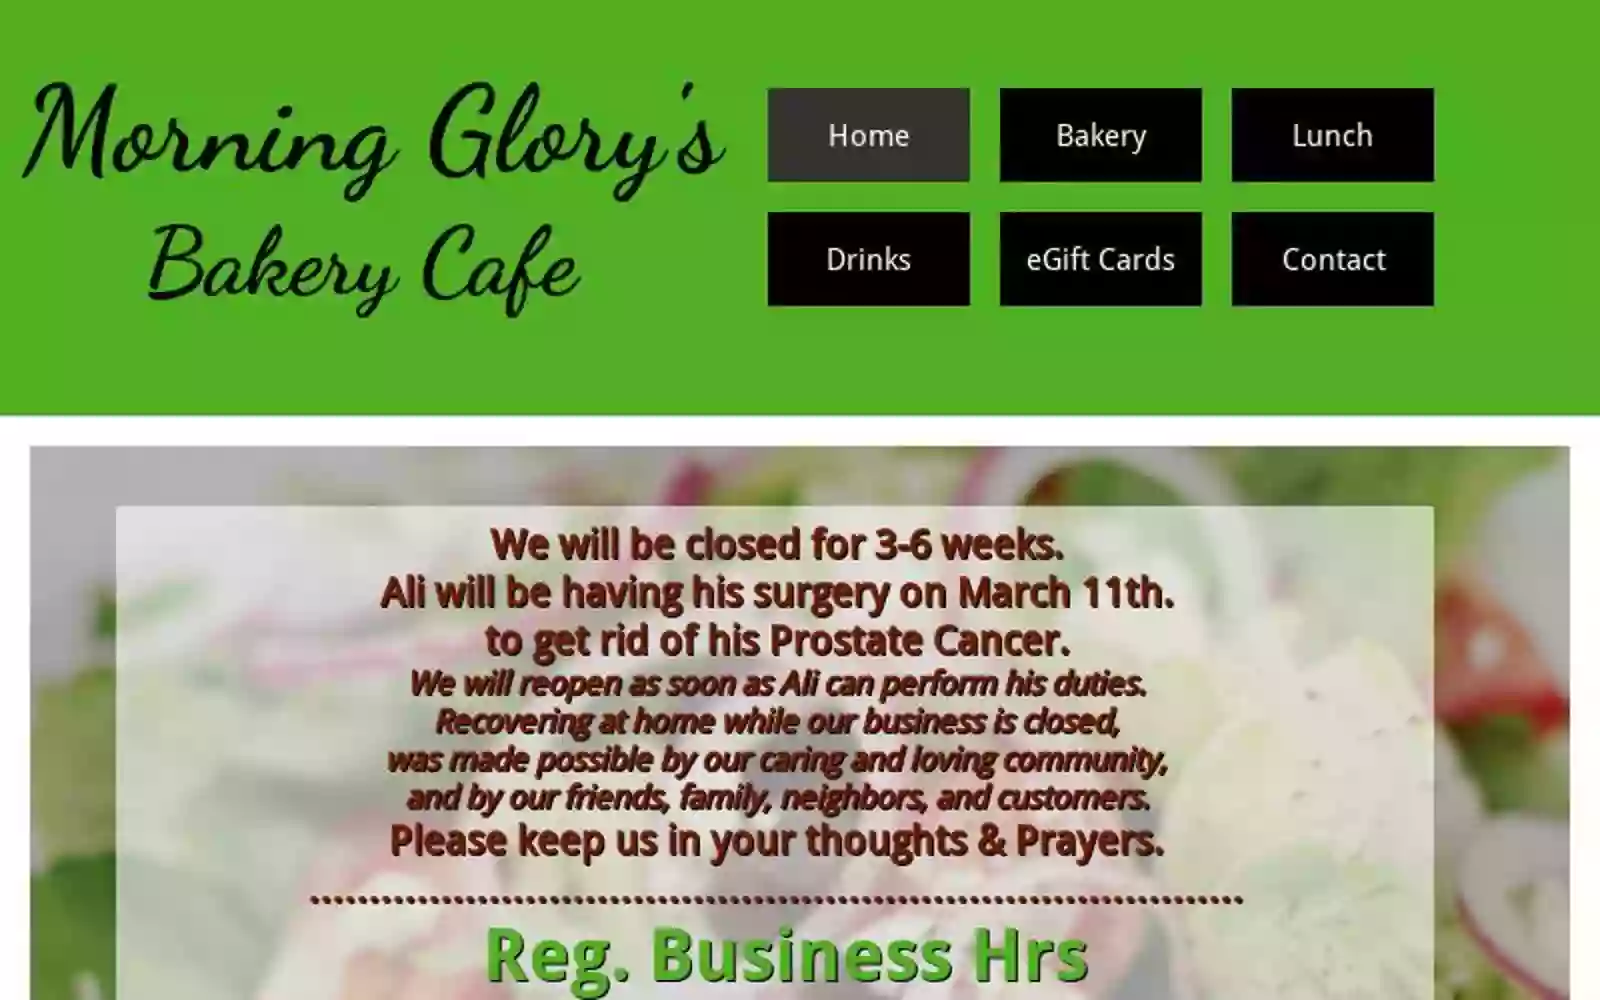 Morning Glory's Bakery Cafe